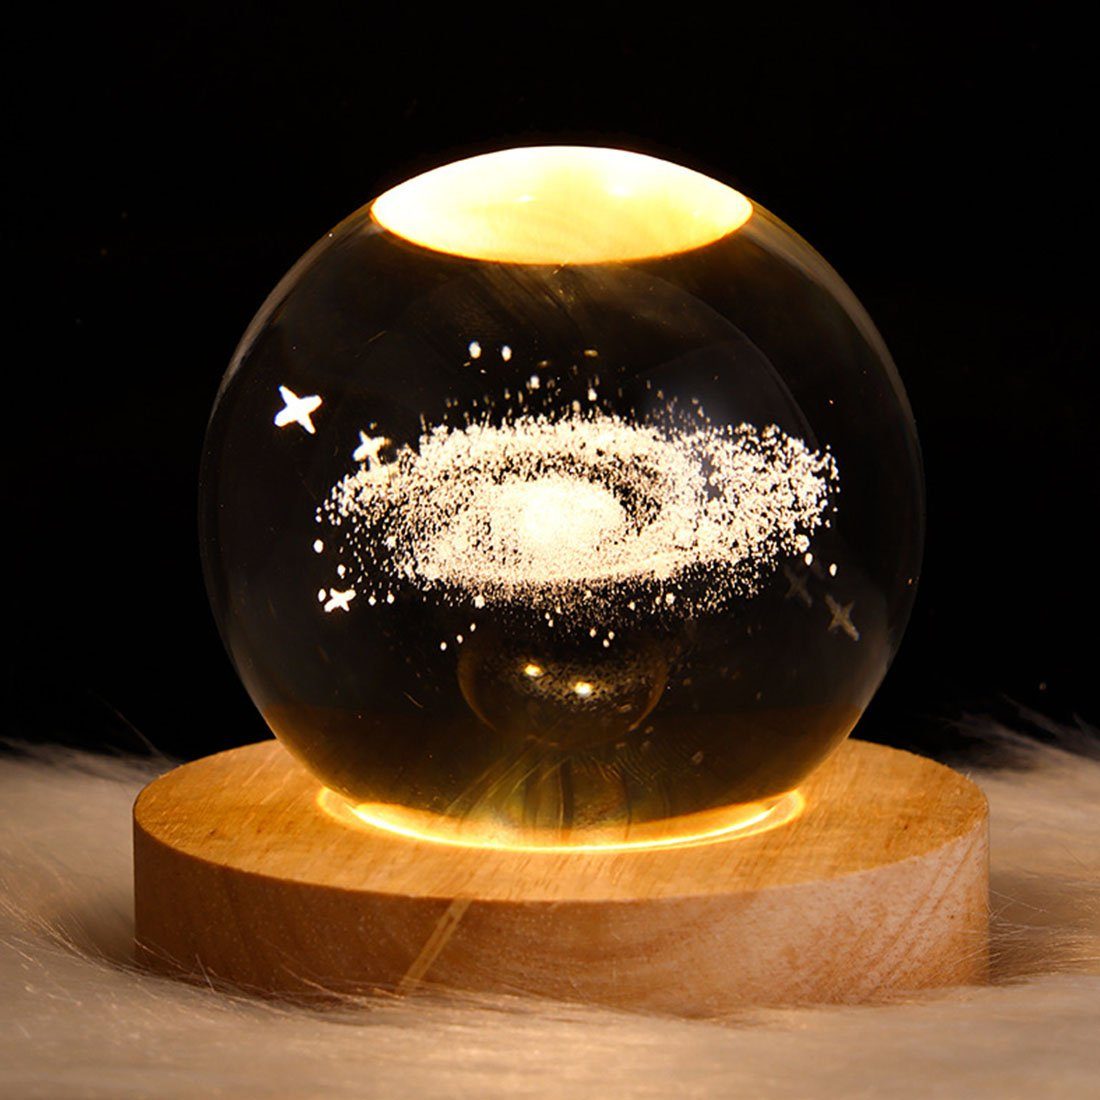 https://i.otto.de/i/otto/42c7f196-af91-48c6-9dea-8deca040dc92/oneid-led-nachtlicht-dekorative-kristallkugel-lampen-planetenlampen-kristall-lampen-a.jpg?$formatz$